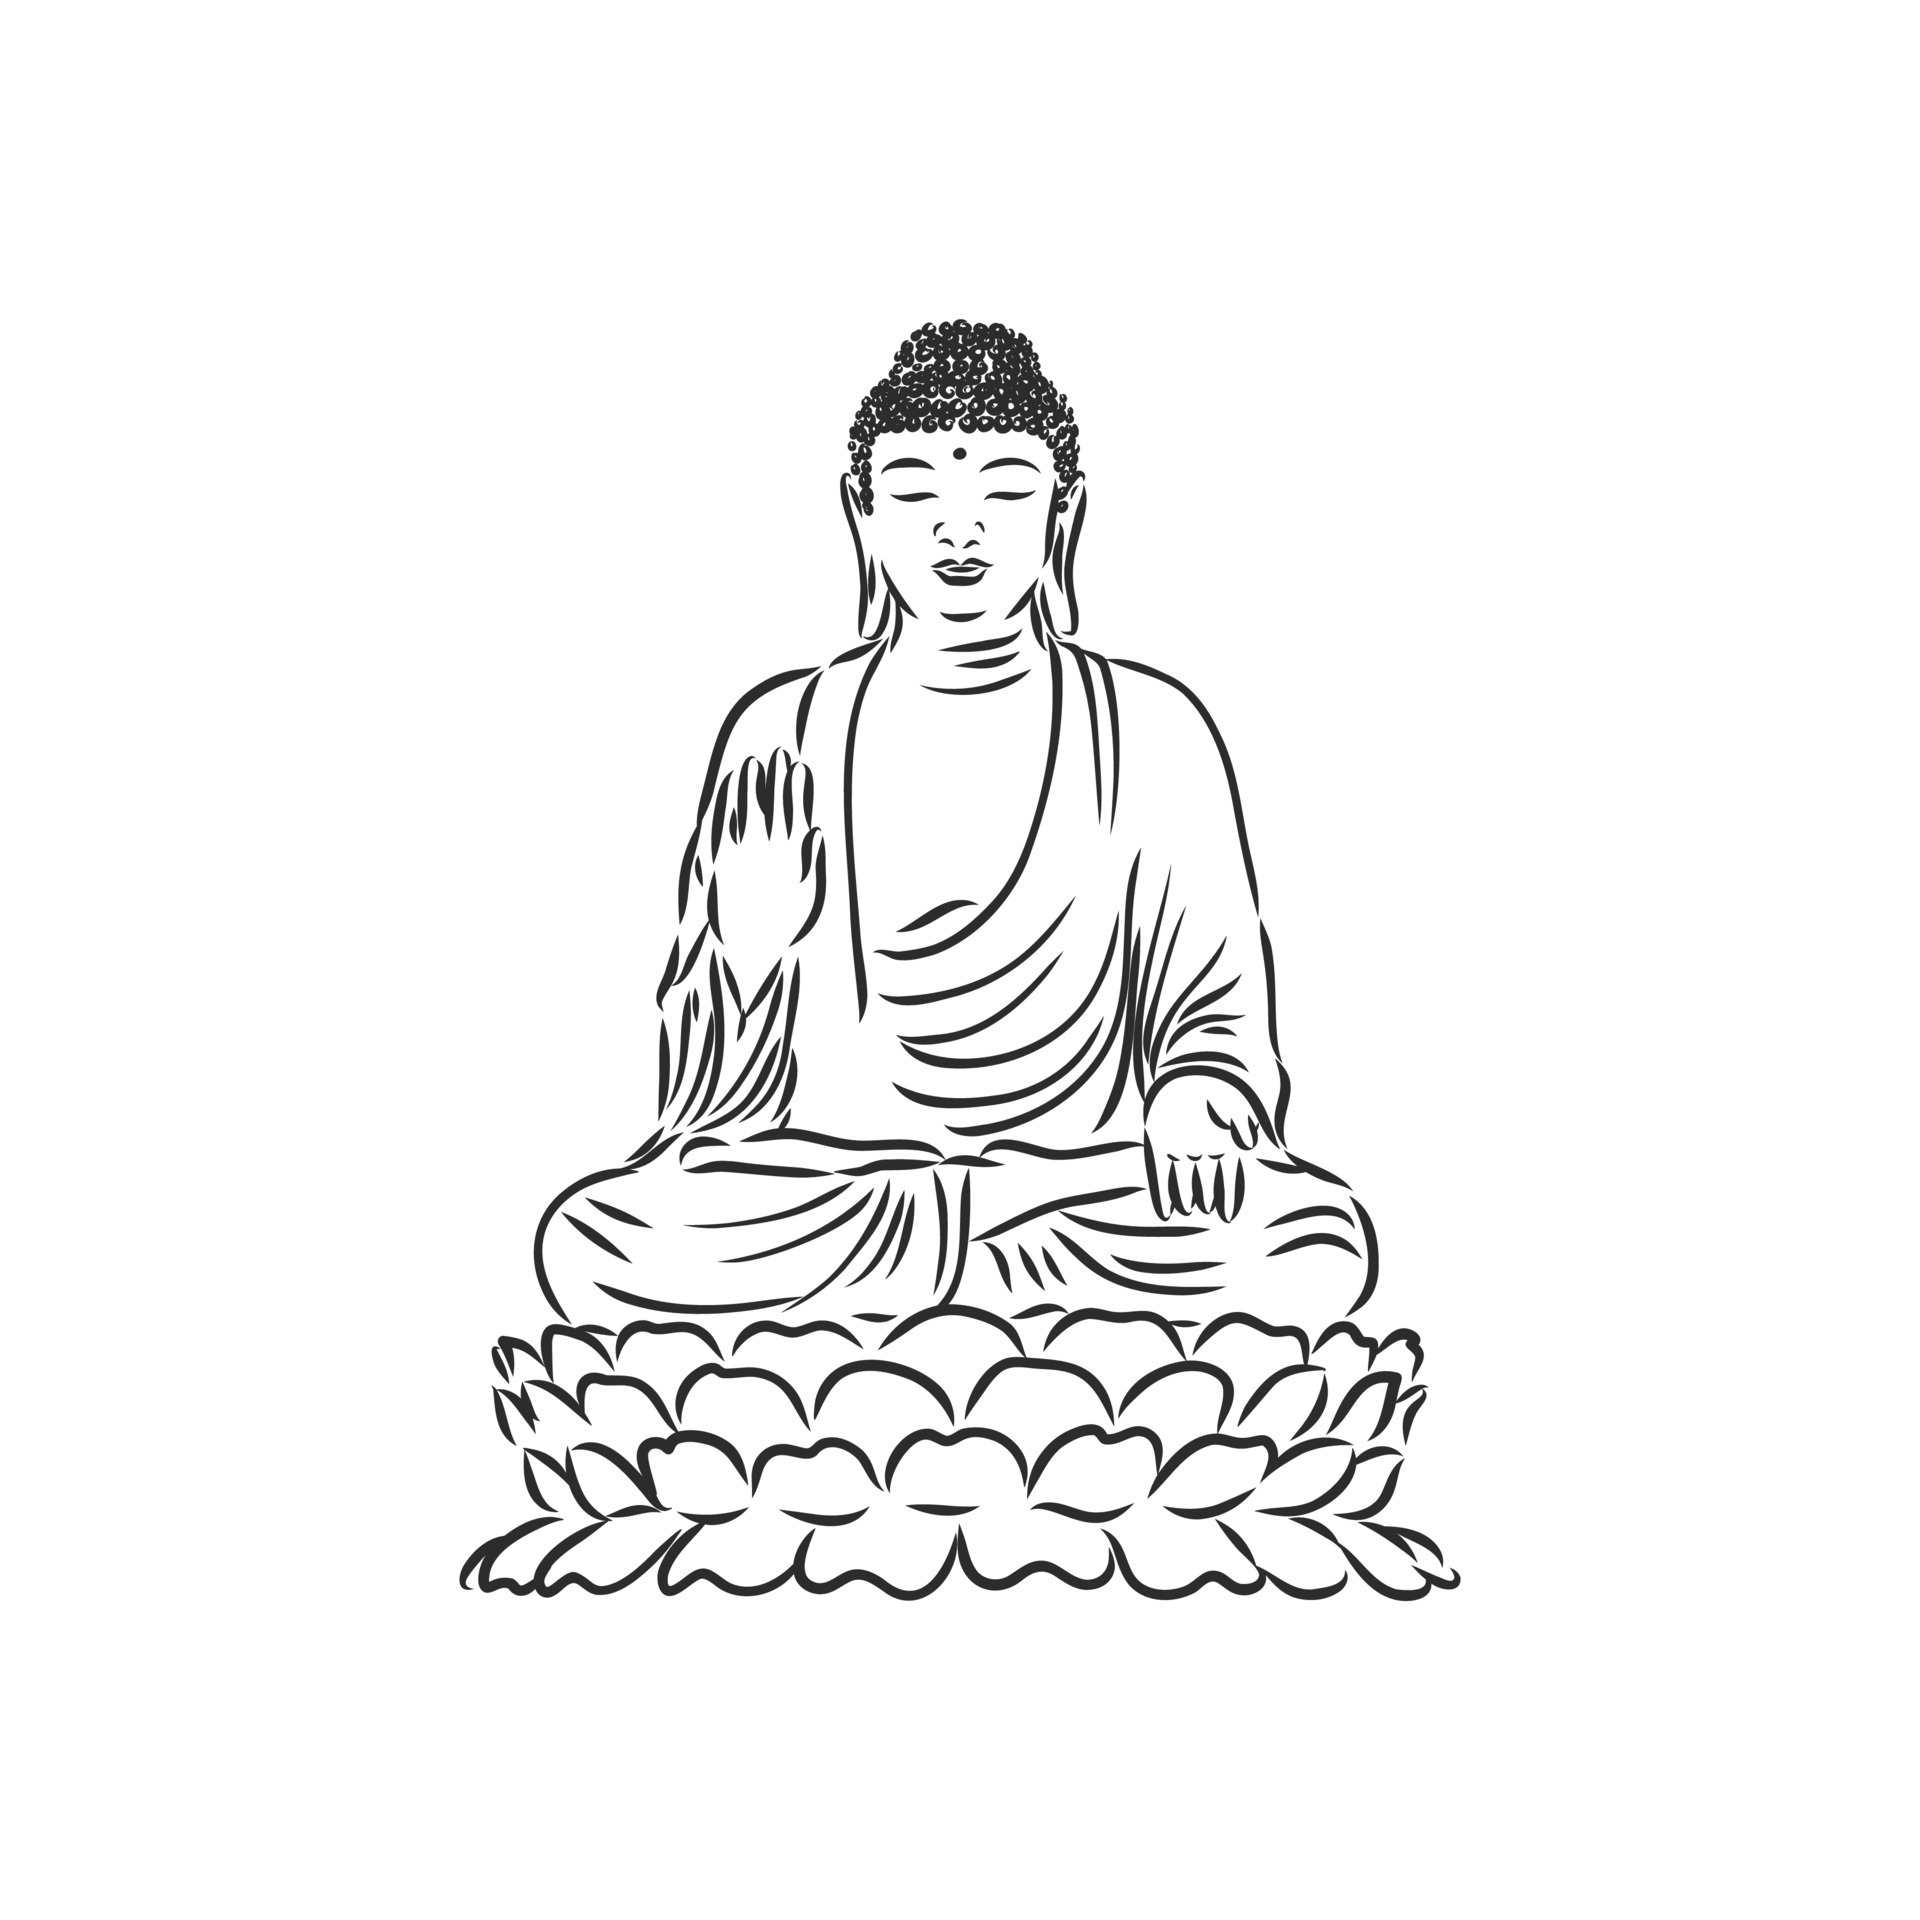 Lord Buddha – Pencil Sketches – A MYTHOLOGY BLOG